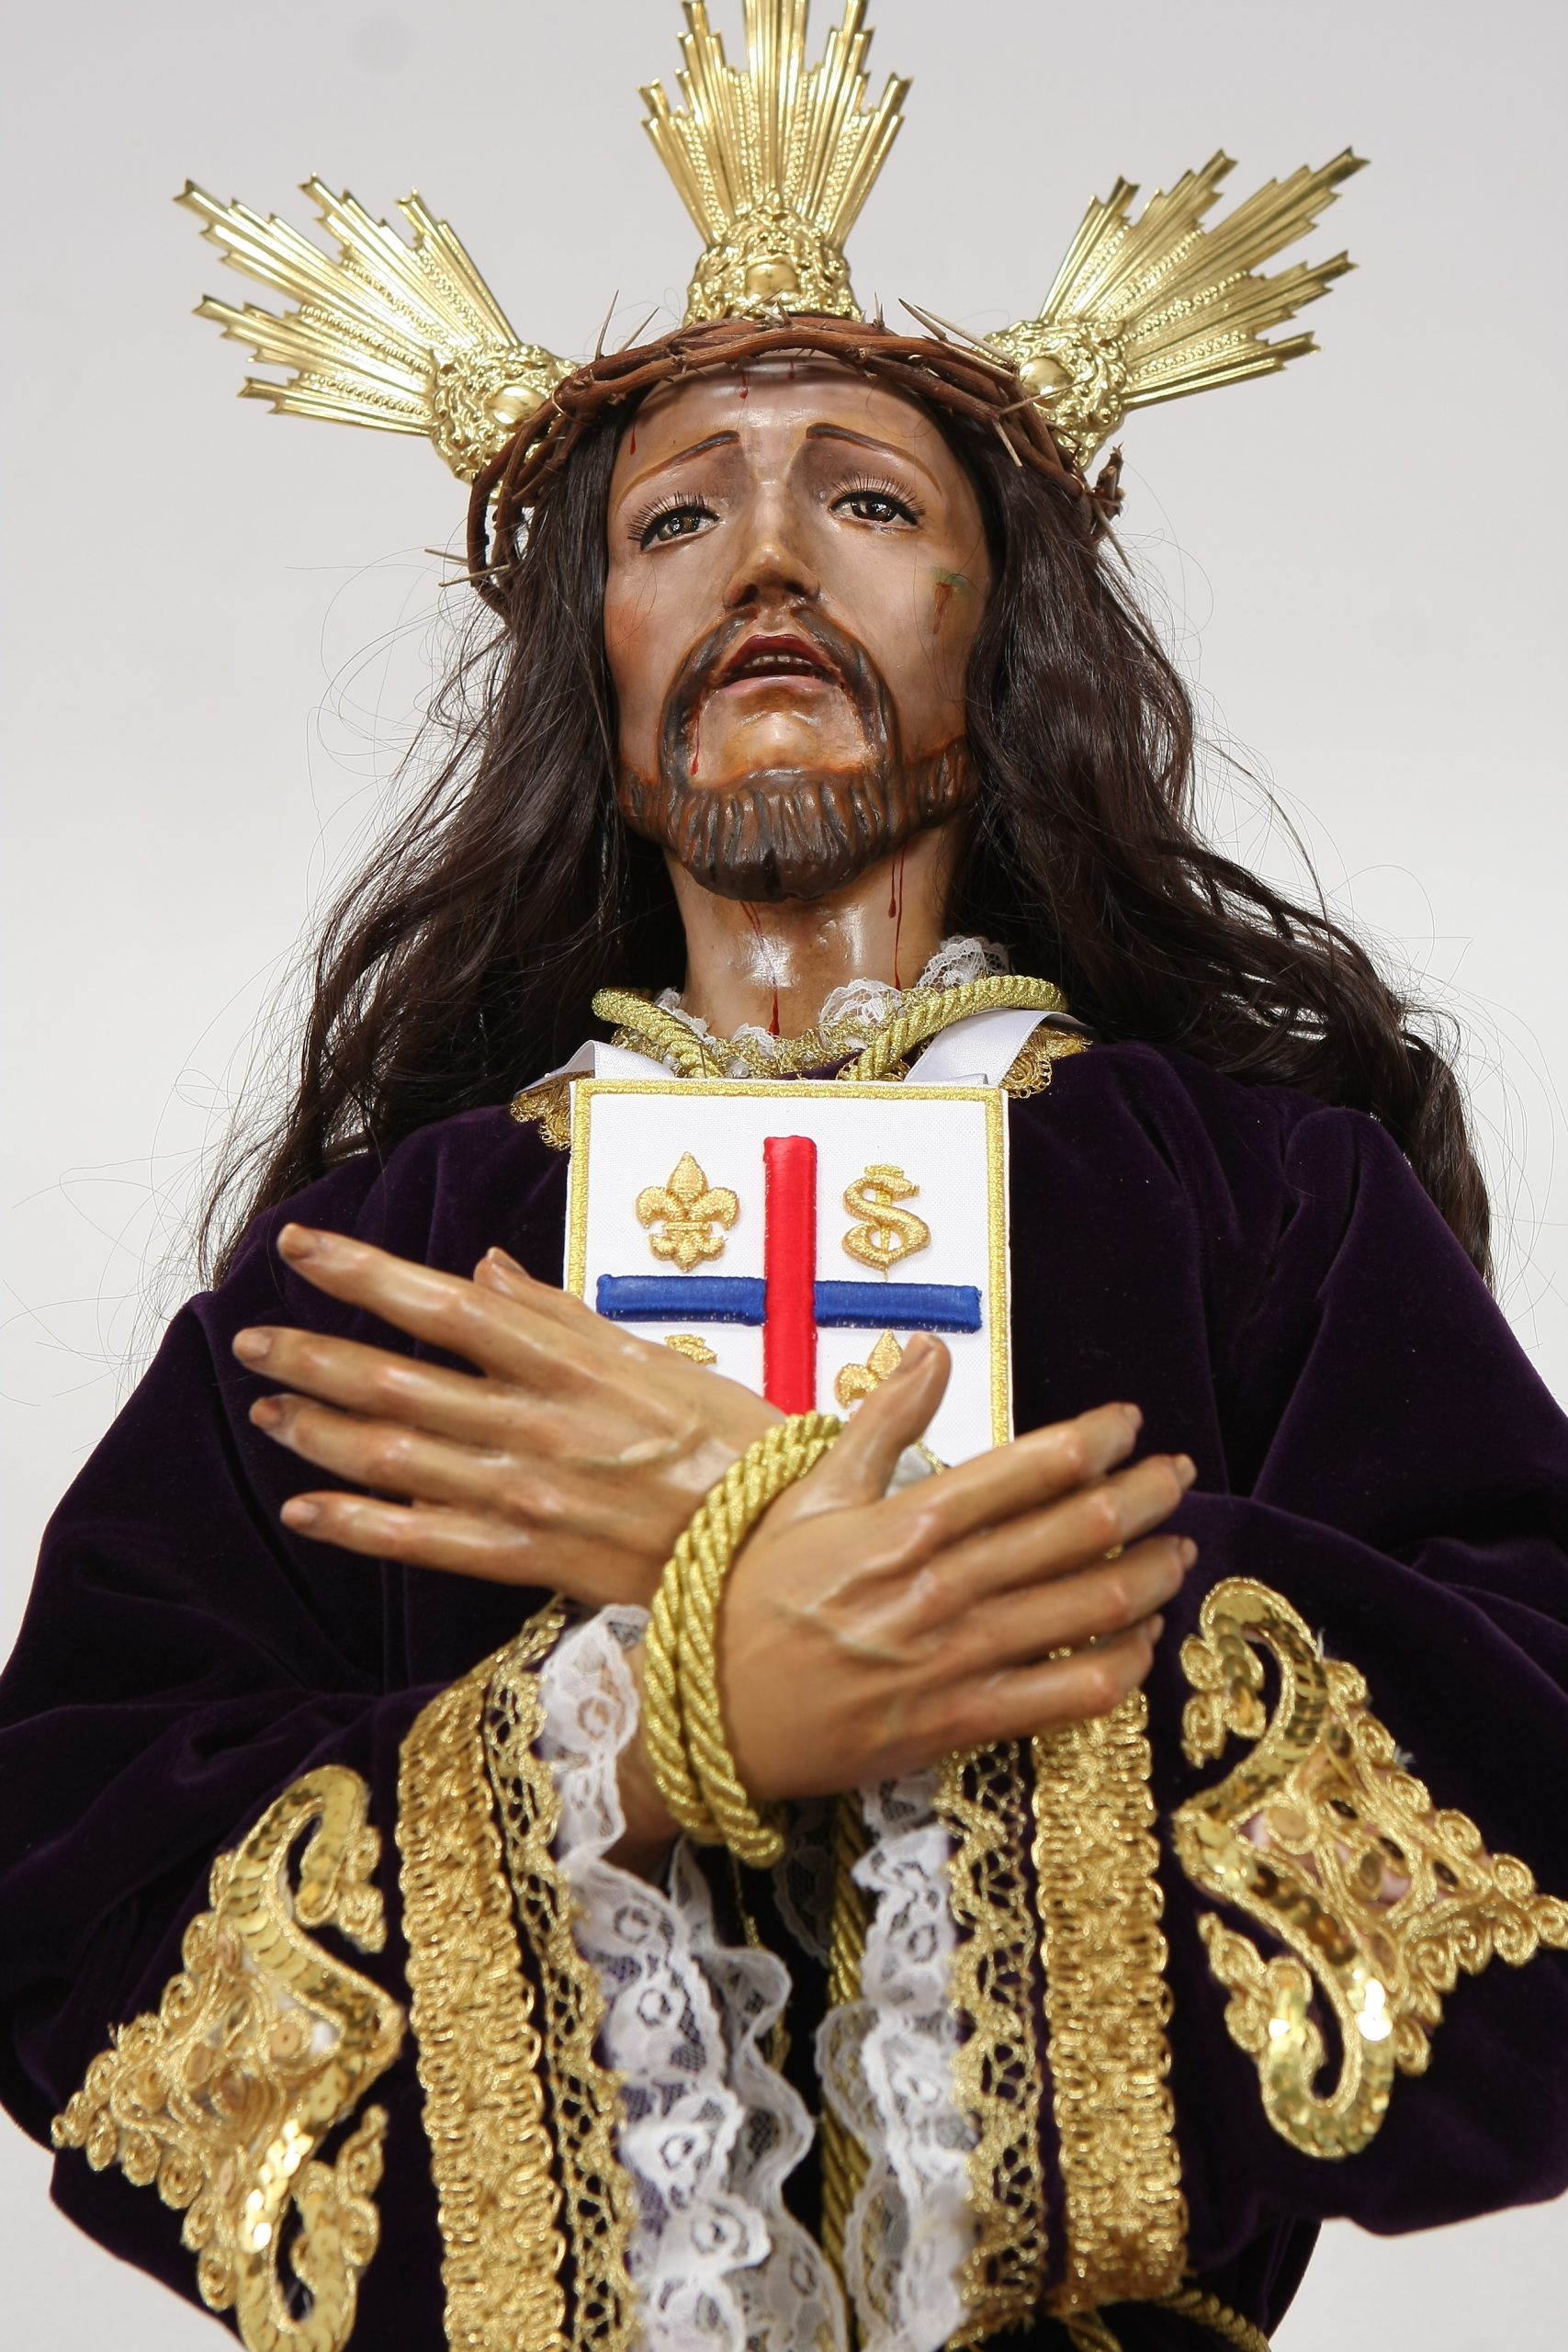 Jesus Cautivo de Medinaceli